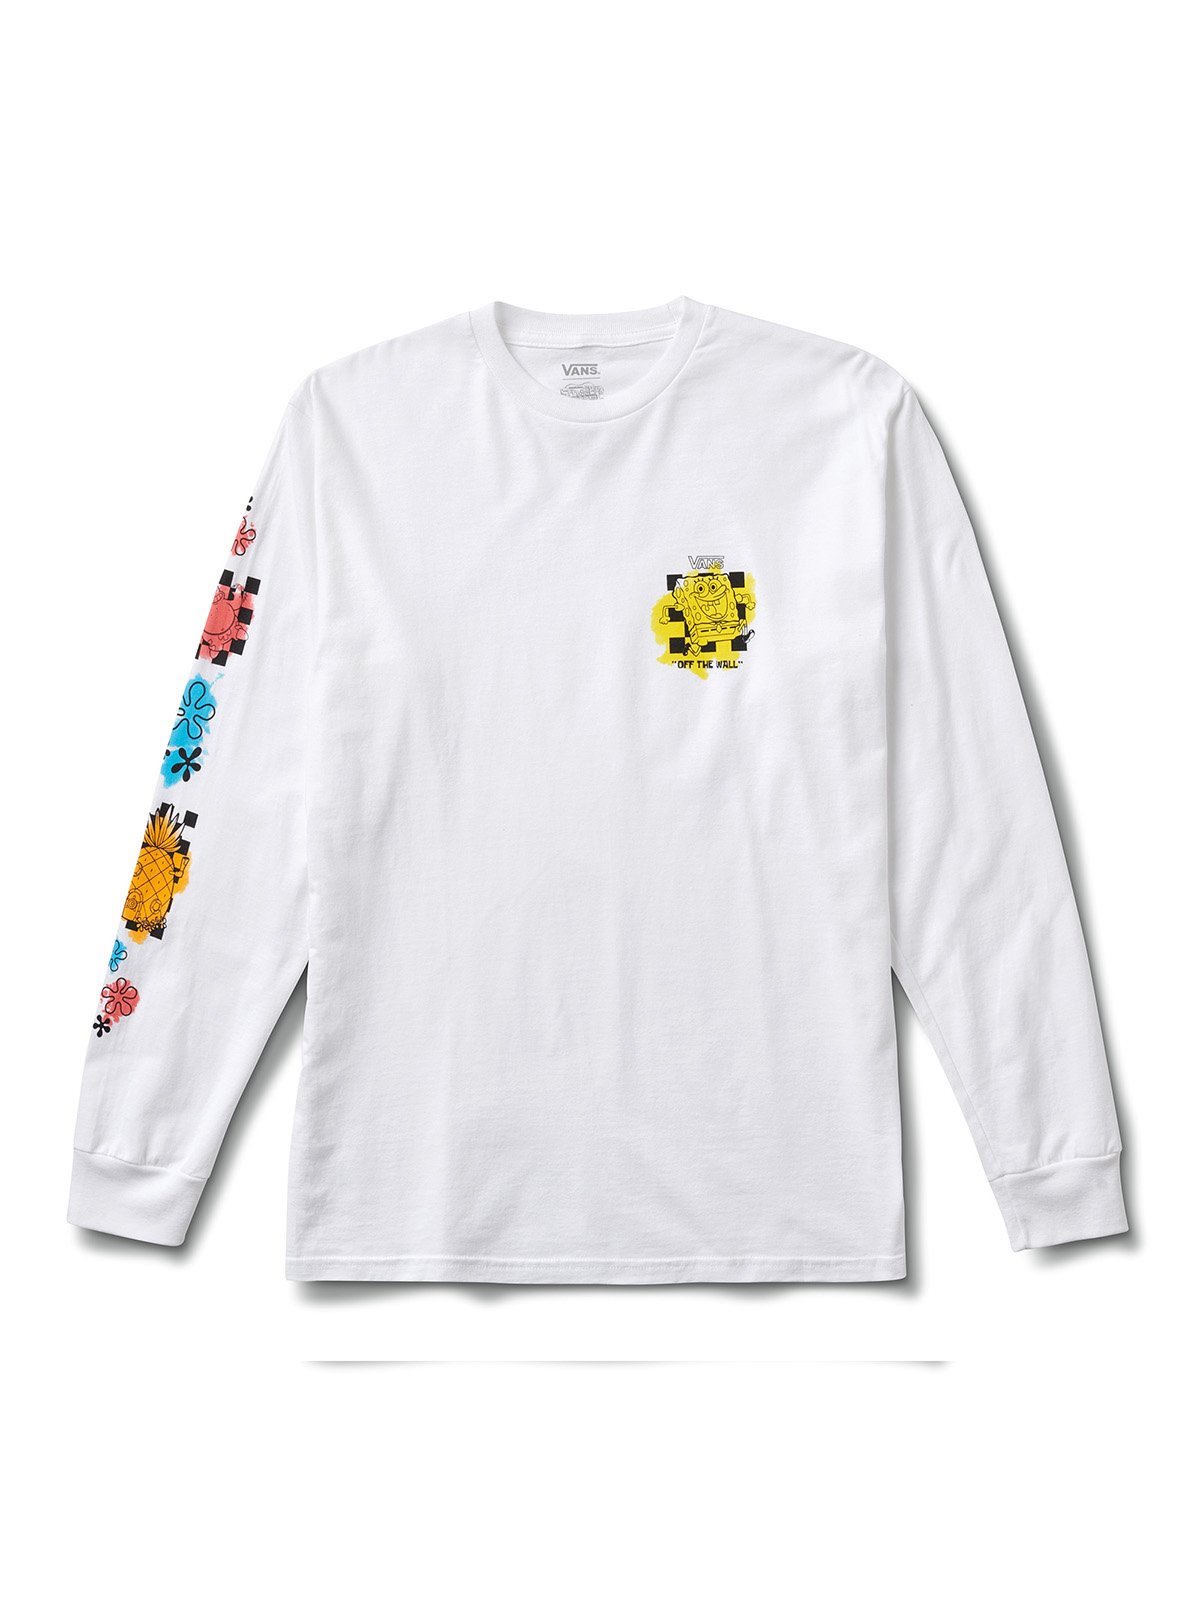 Vans X Spongebob Airbrush Long Sleeve T-Shirt